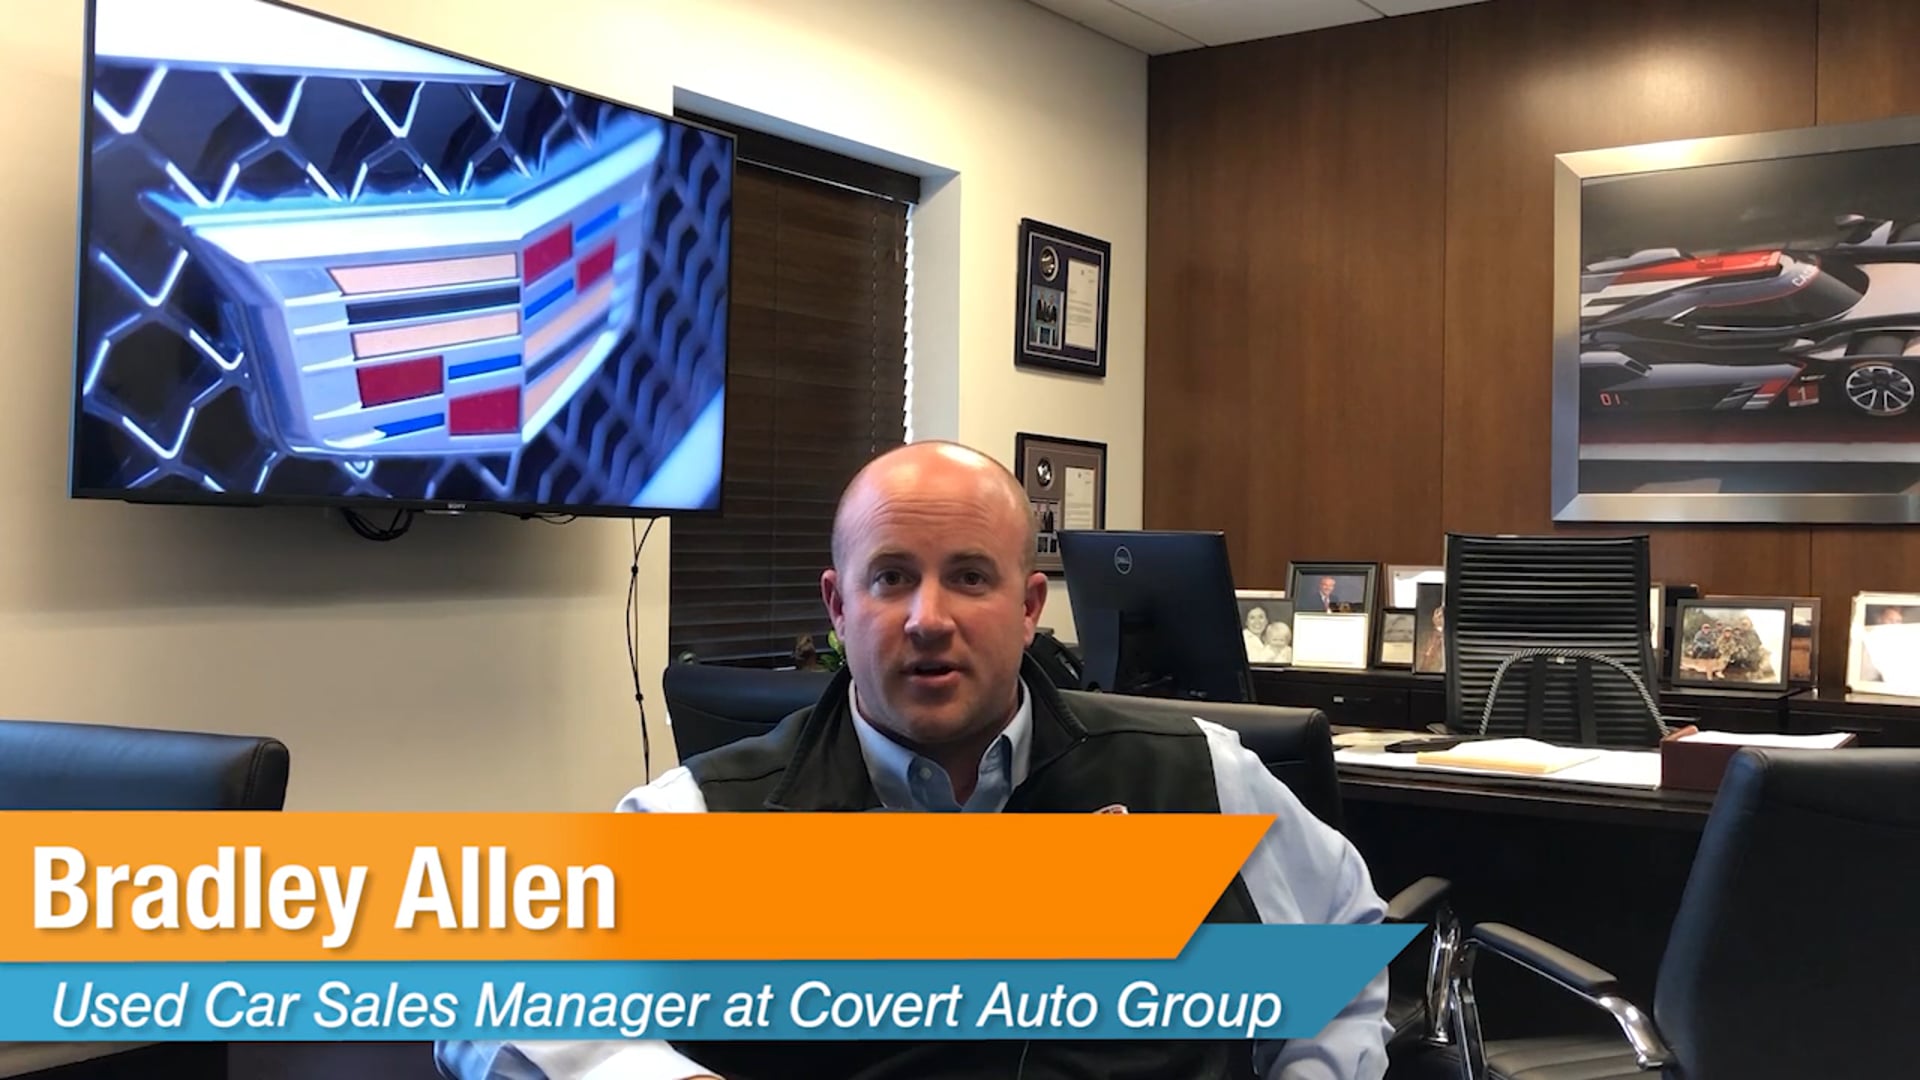 Success at Covert Auto Group - Bradley Allen